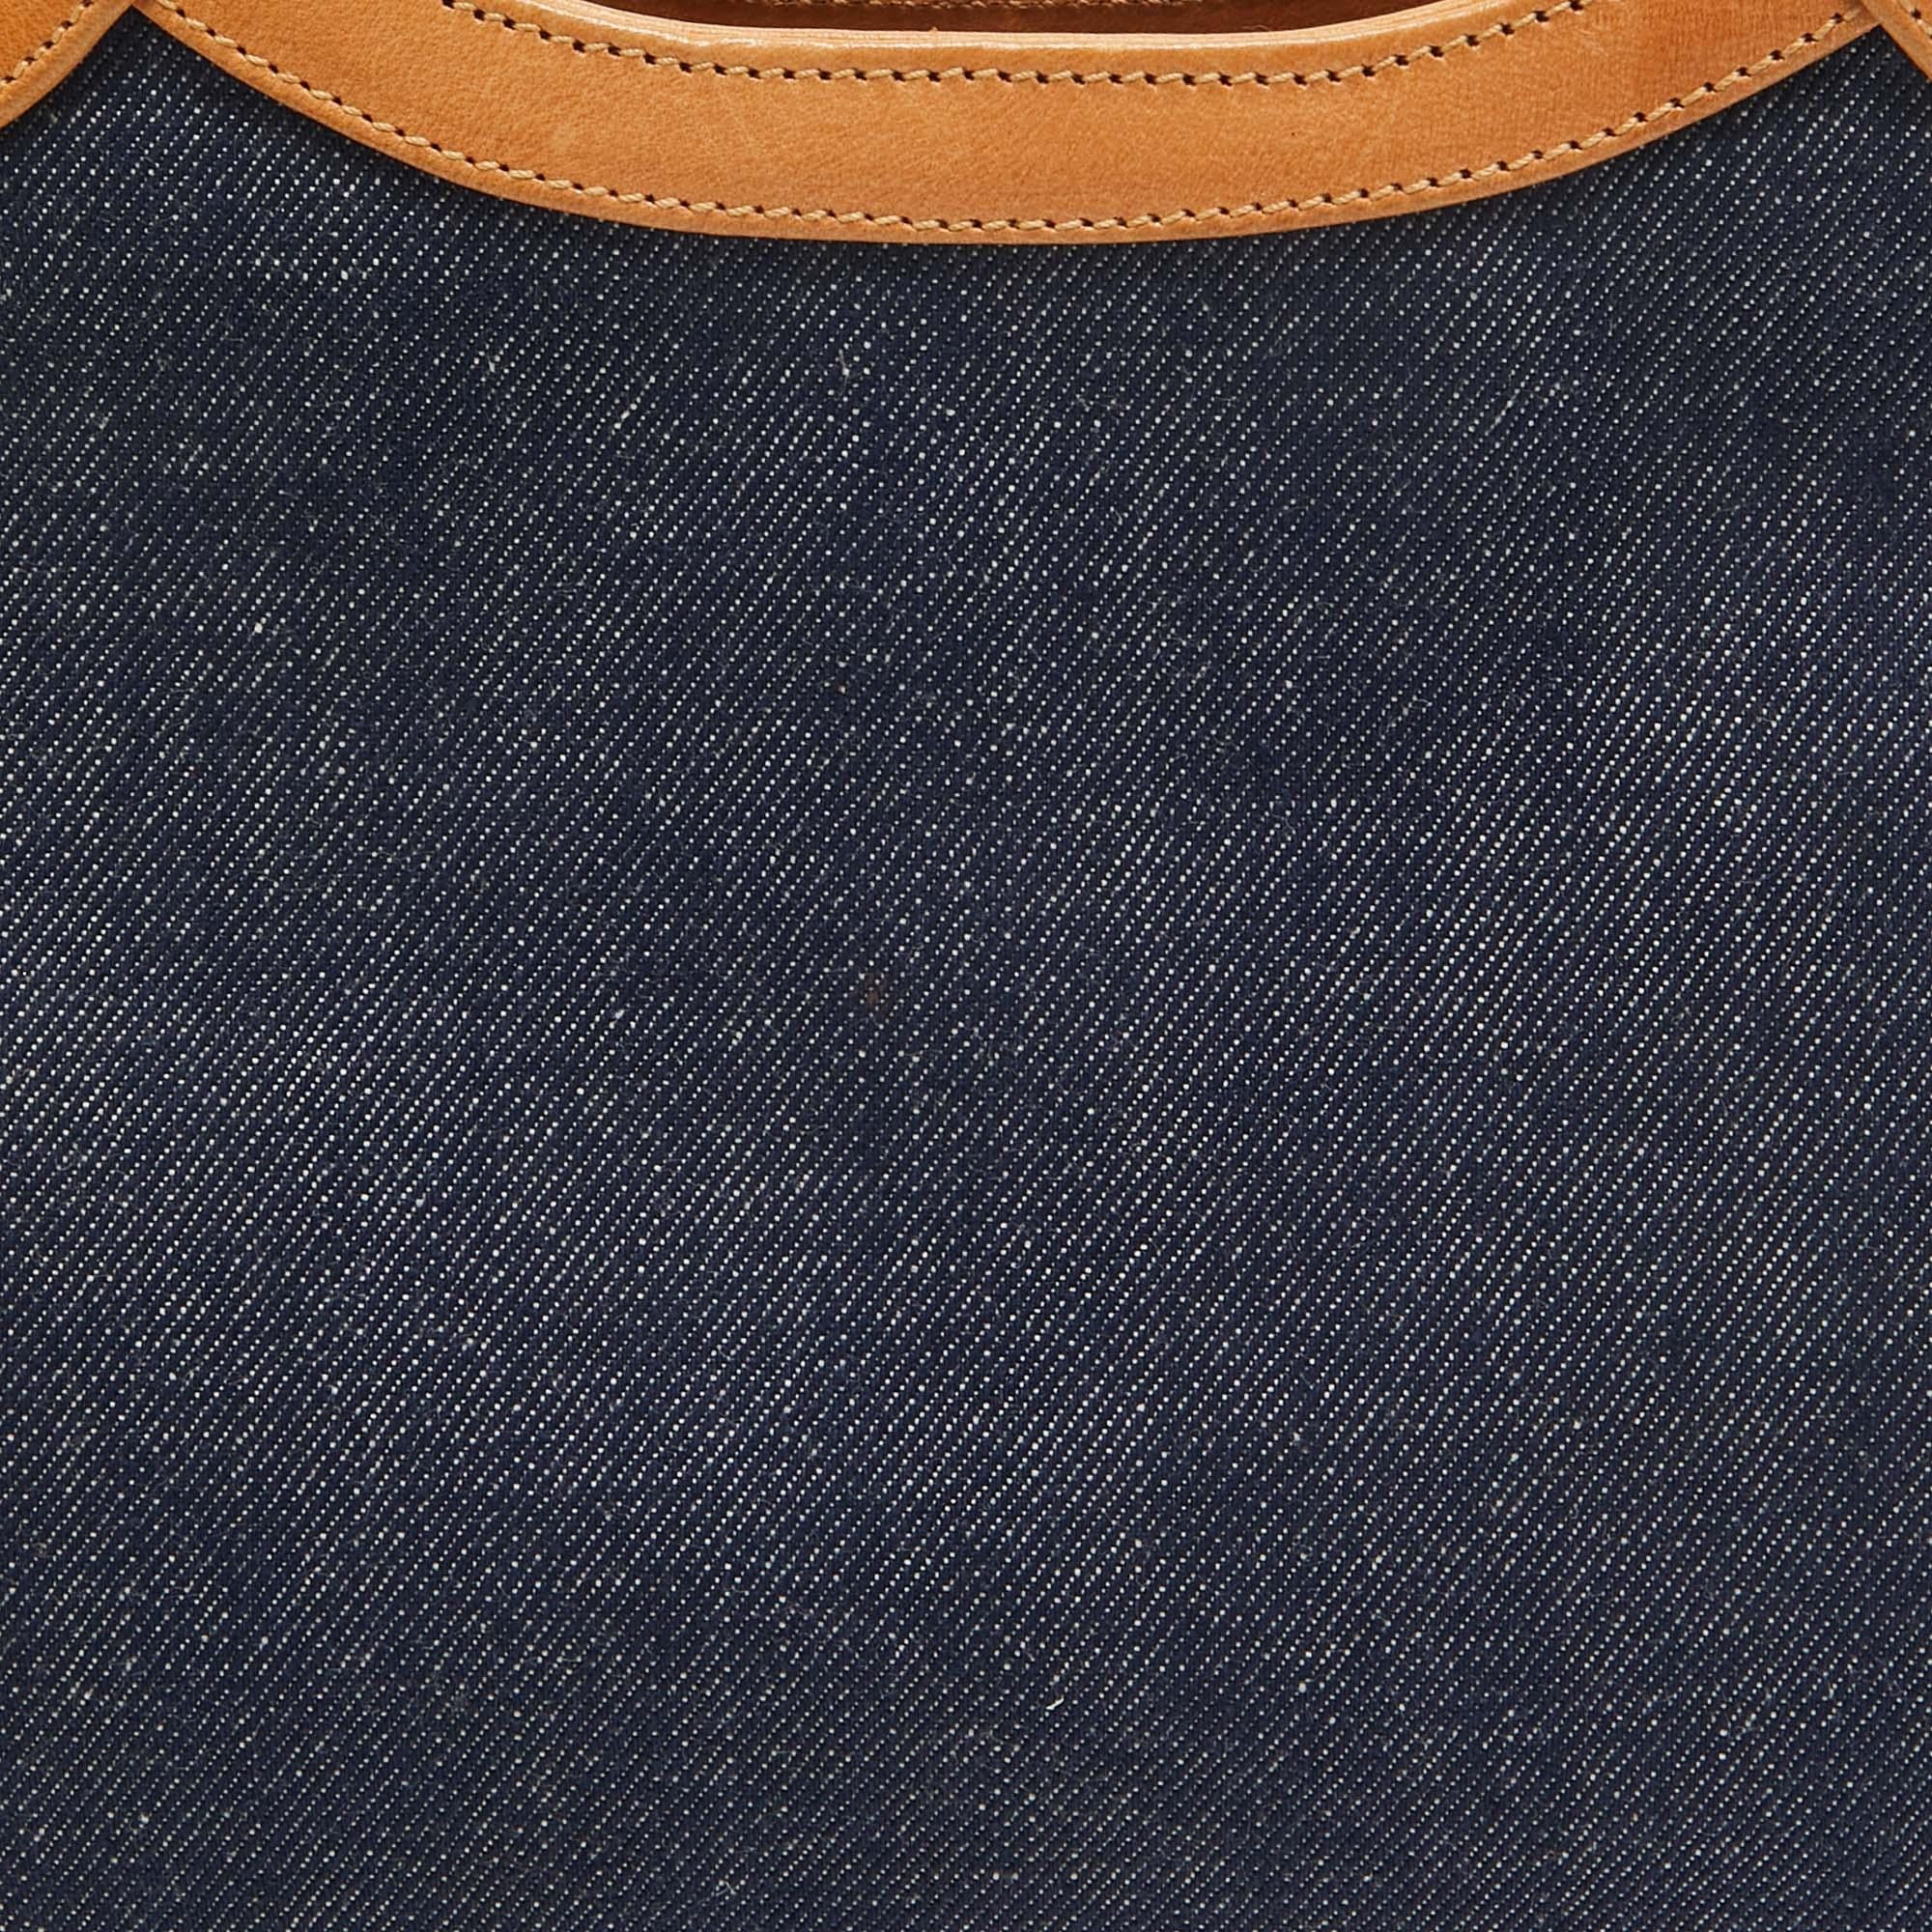 Burberry Blue/Tan Denim and Leather Satchel 6